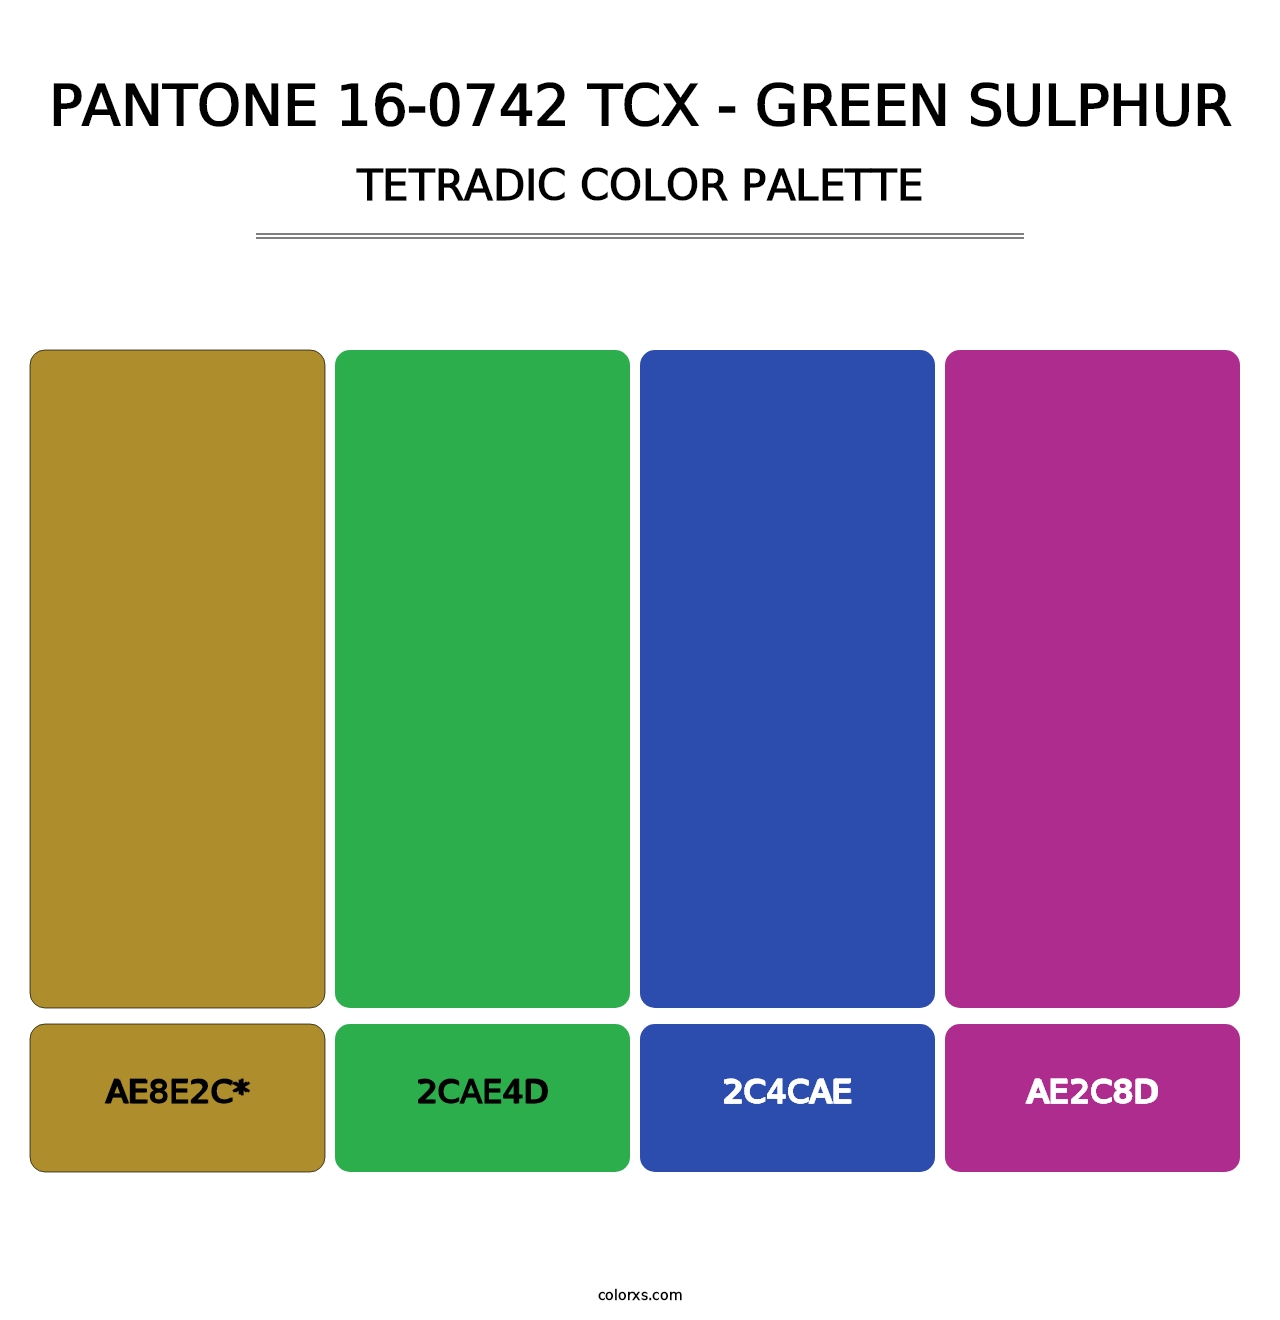 PANTONE 16-0742 TCX - Green Sulphur - Tetradic Color Palette